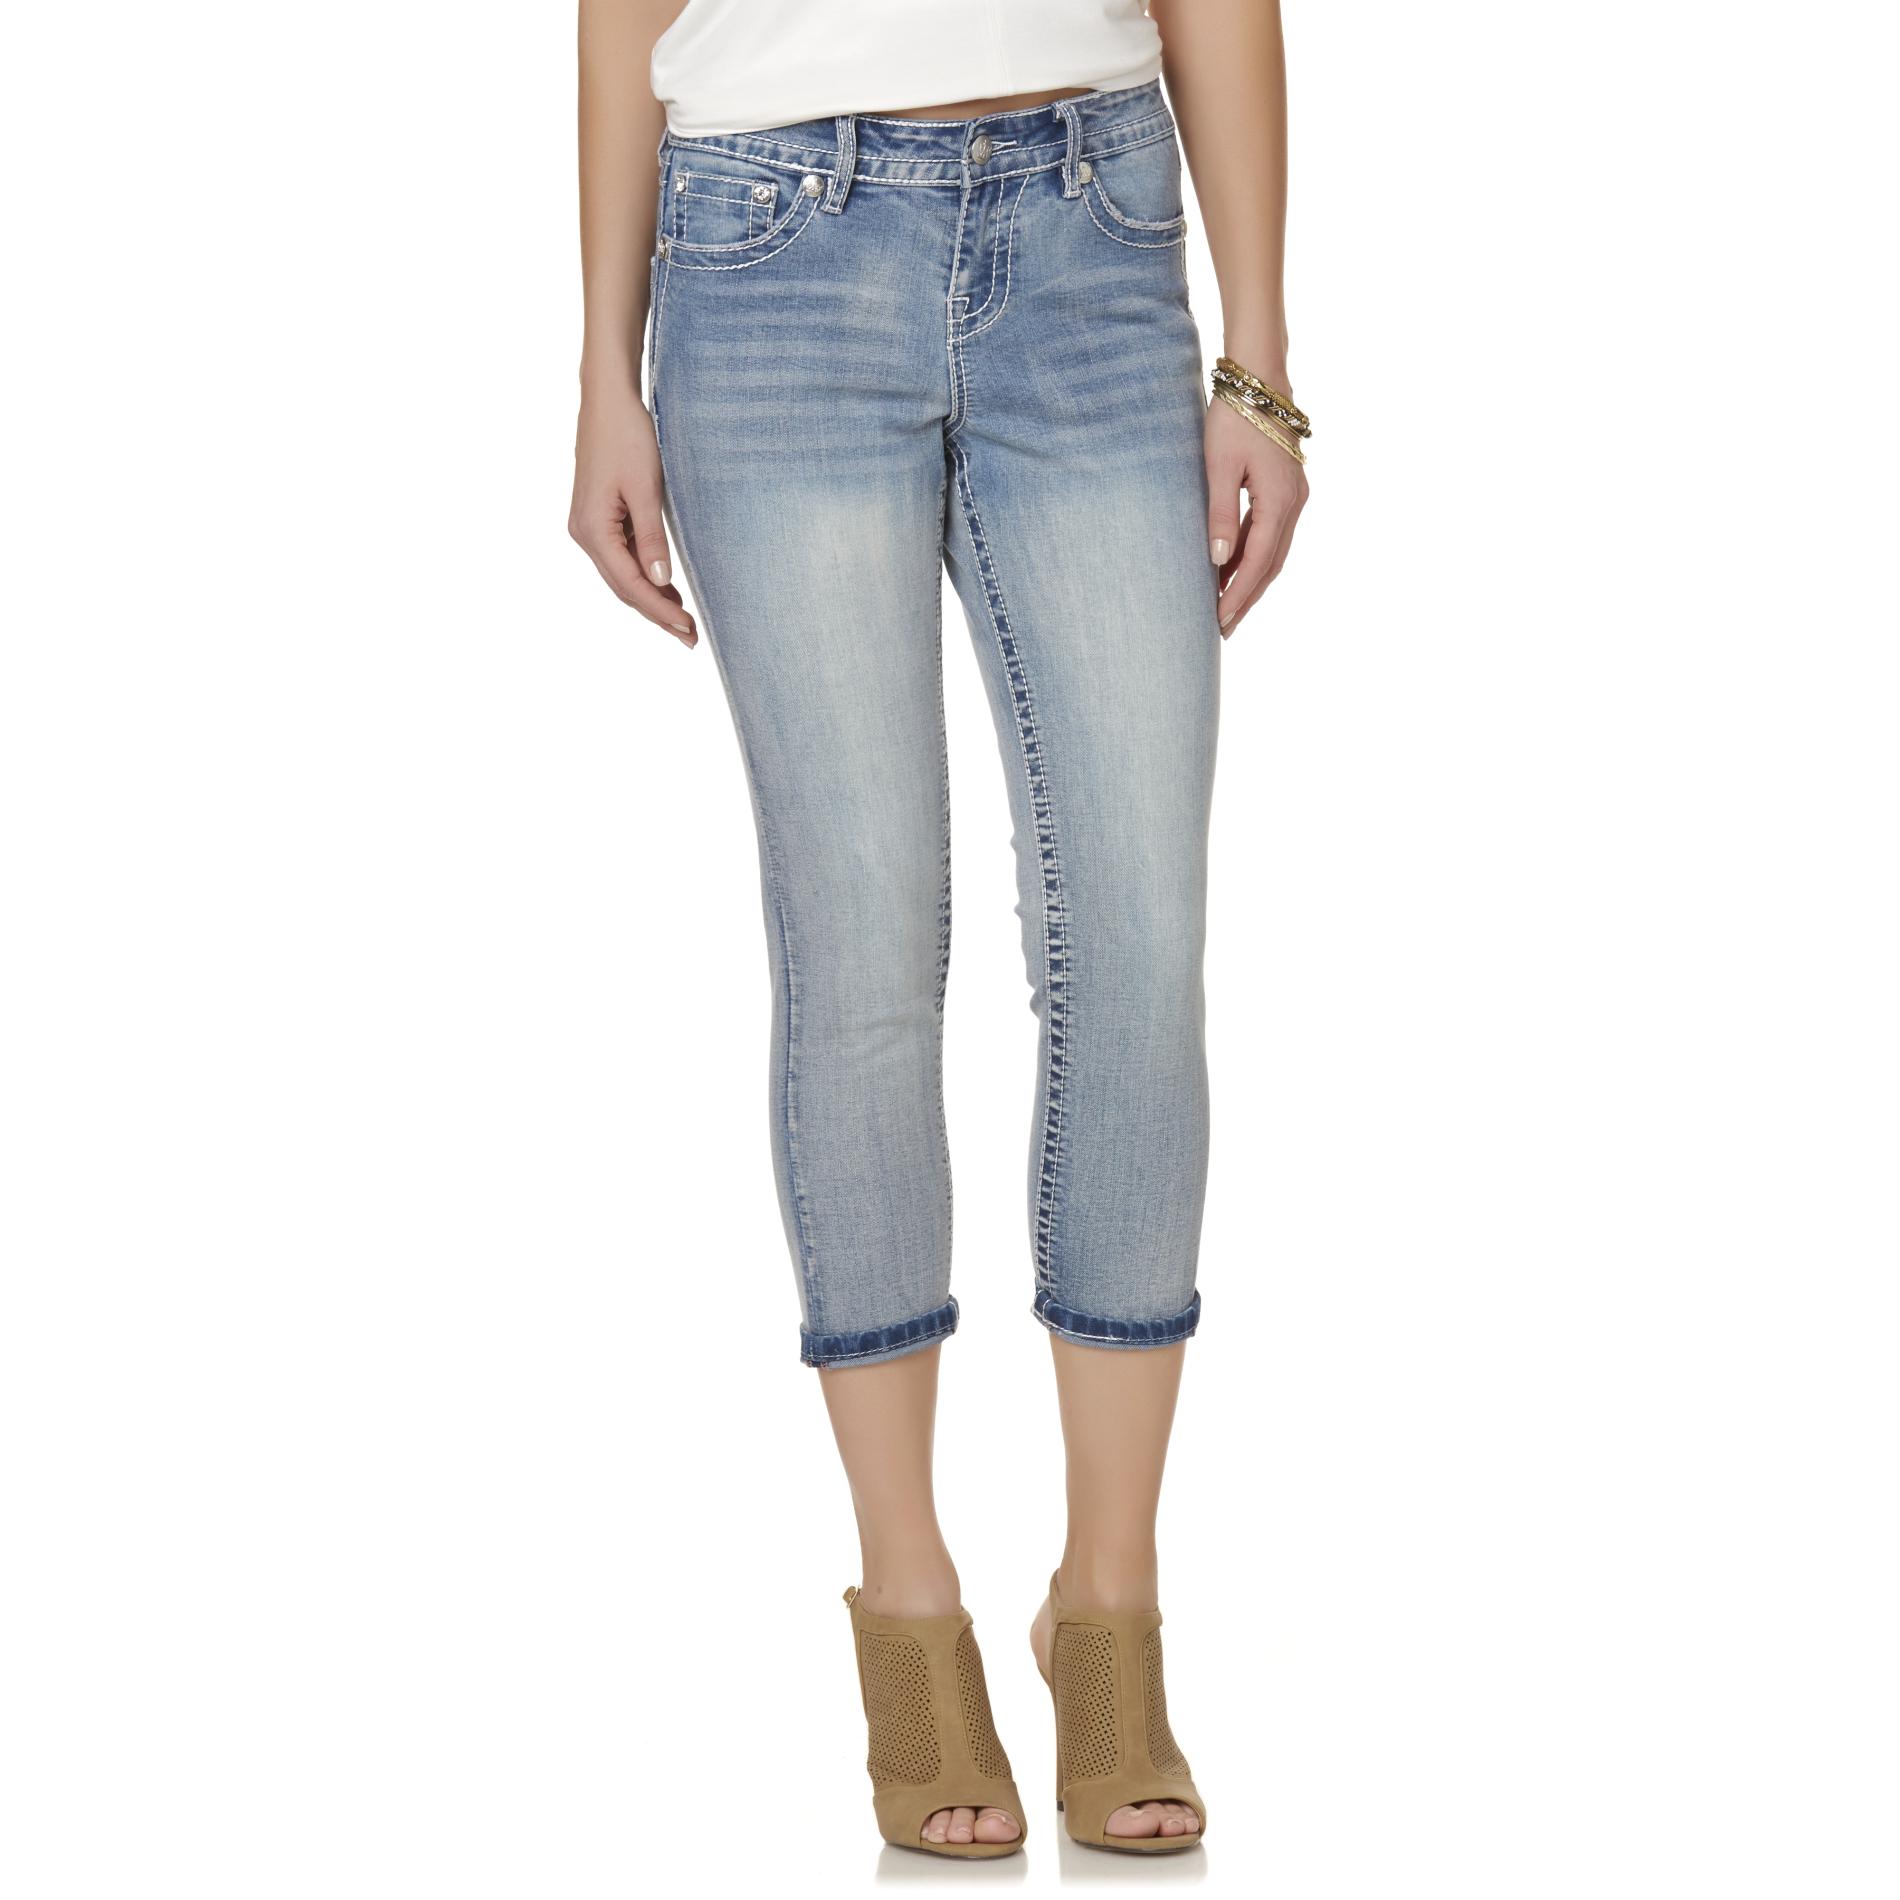 Rebel & Soul Women's Embellished Cropped Skinny Jeans